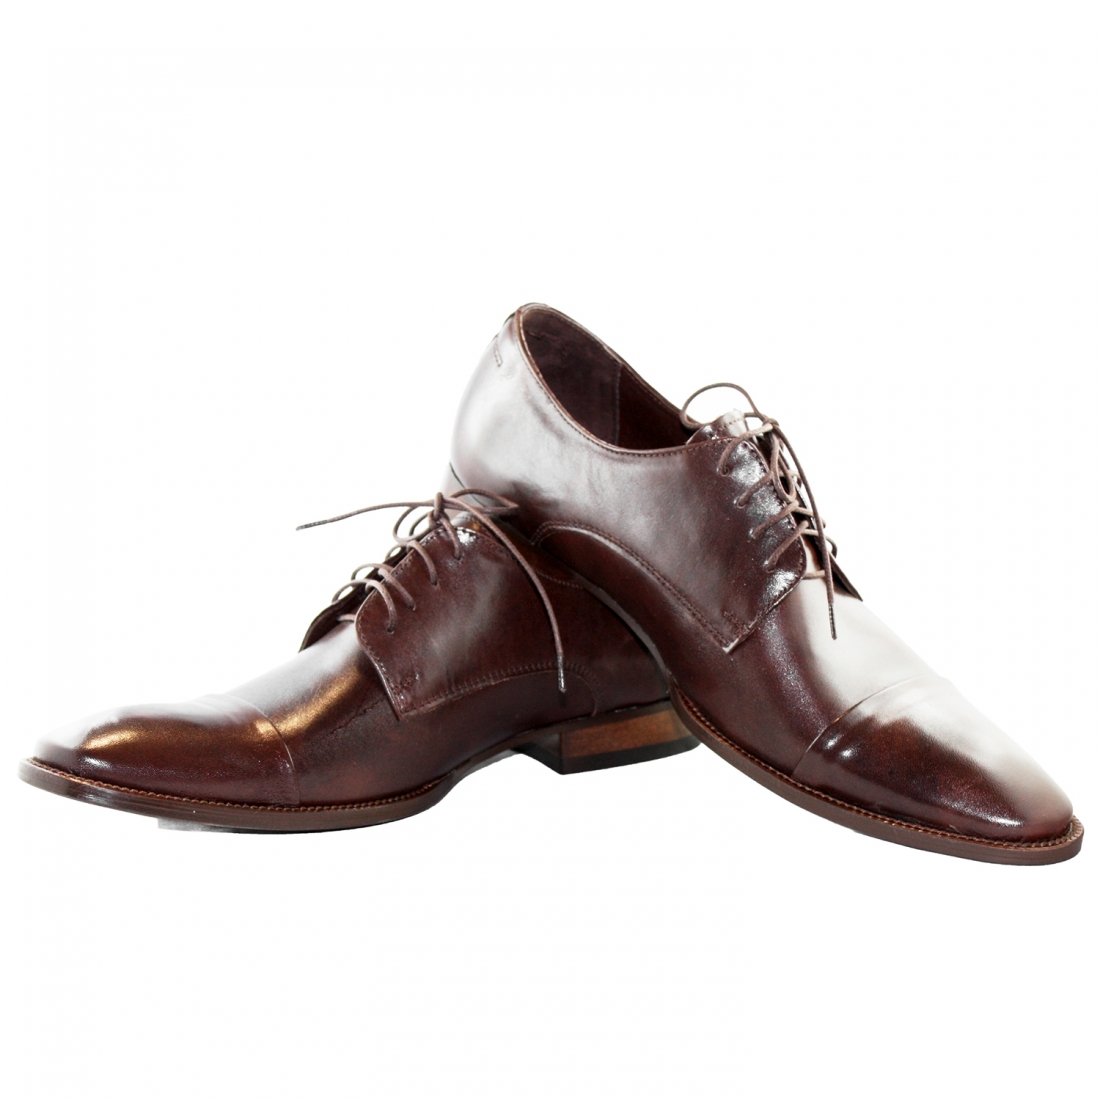 Modello Cognacello - Chaussure Classique - Handmade Colorful Italian Leather Shoes